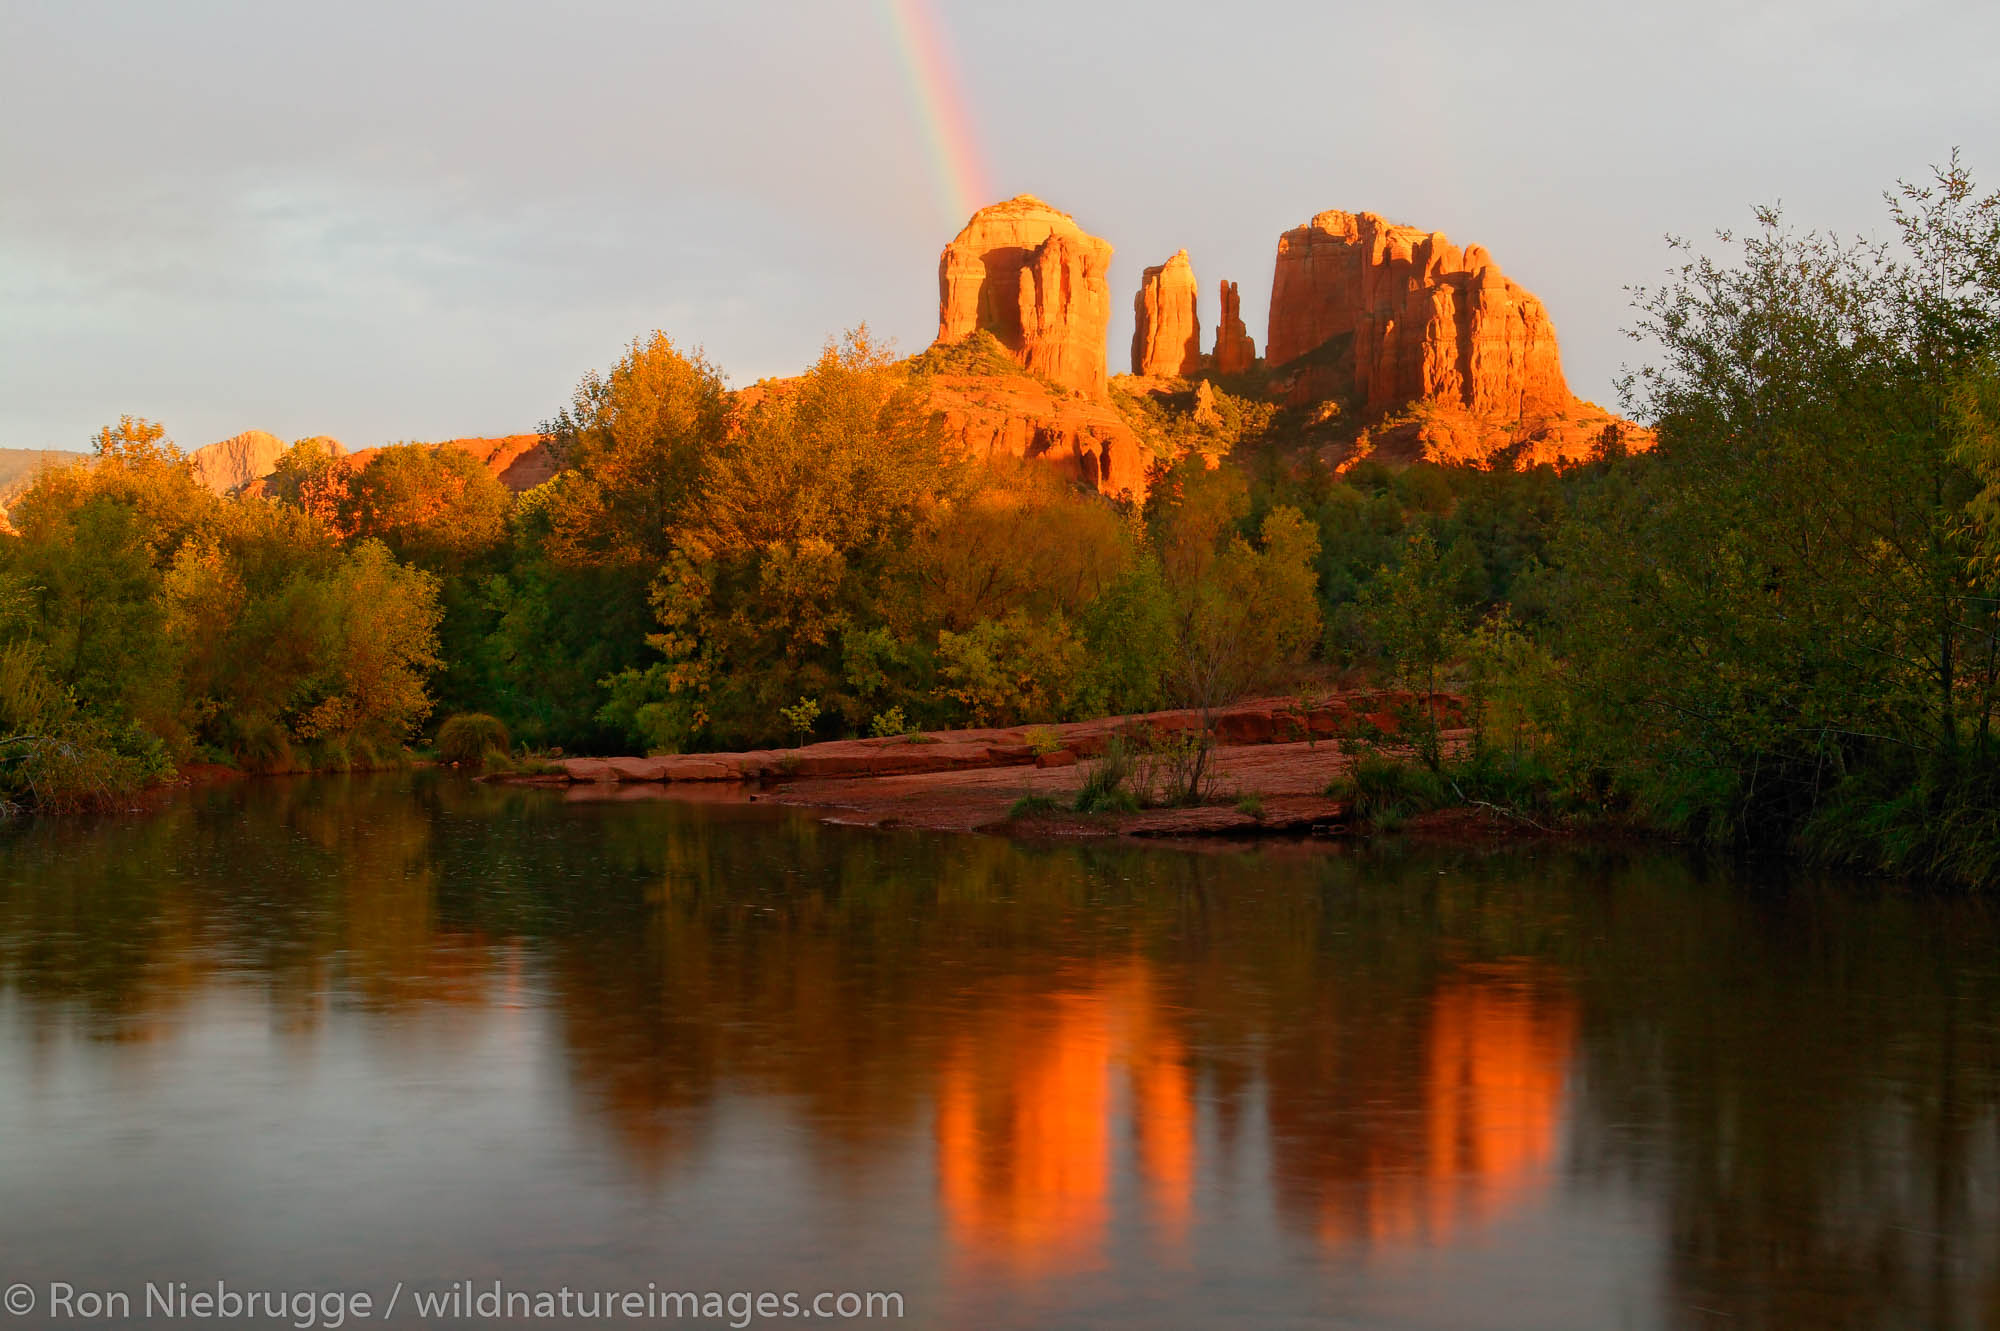 A rainbow over Cathedral Rock and Oak Creek, Sedona, Arizona.